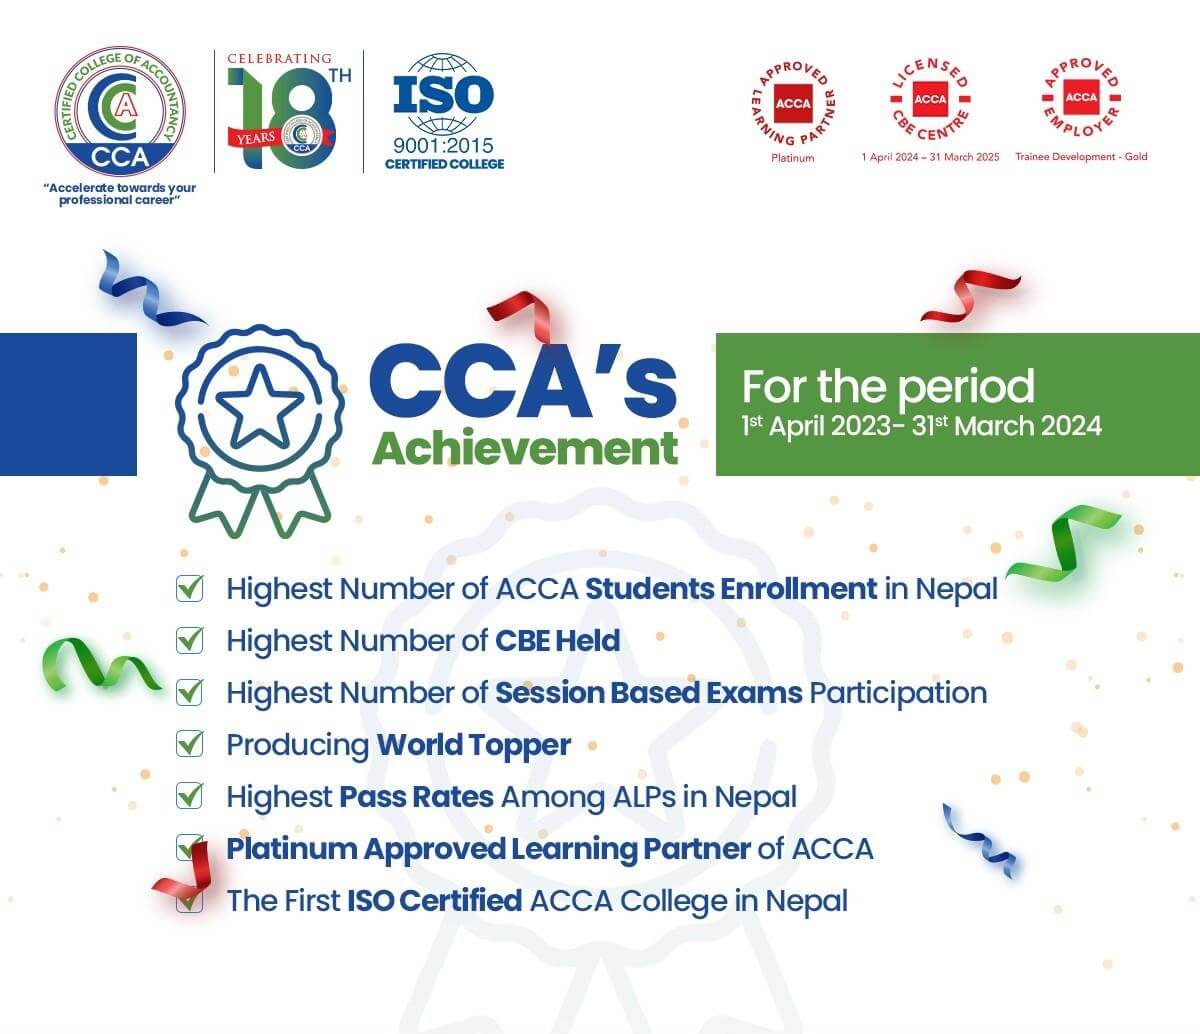 CCA Achievement for the Period 1st April 2023- 31st March 2024